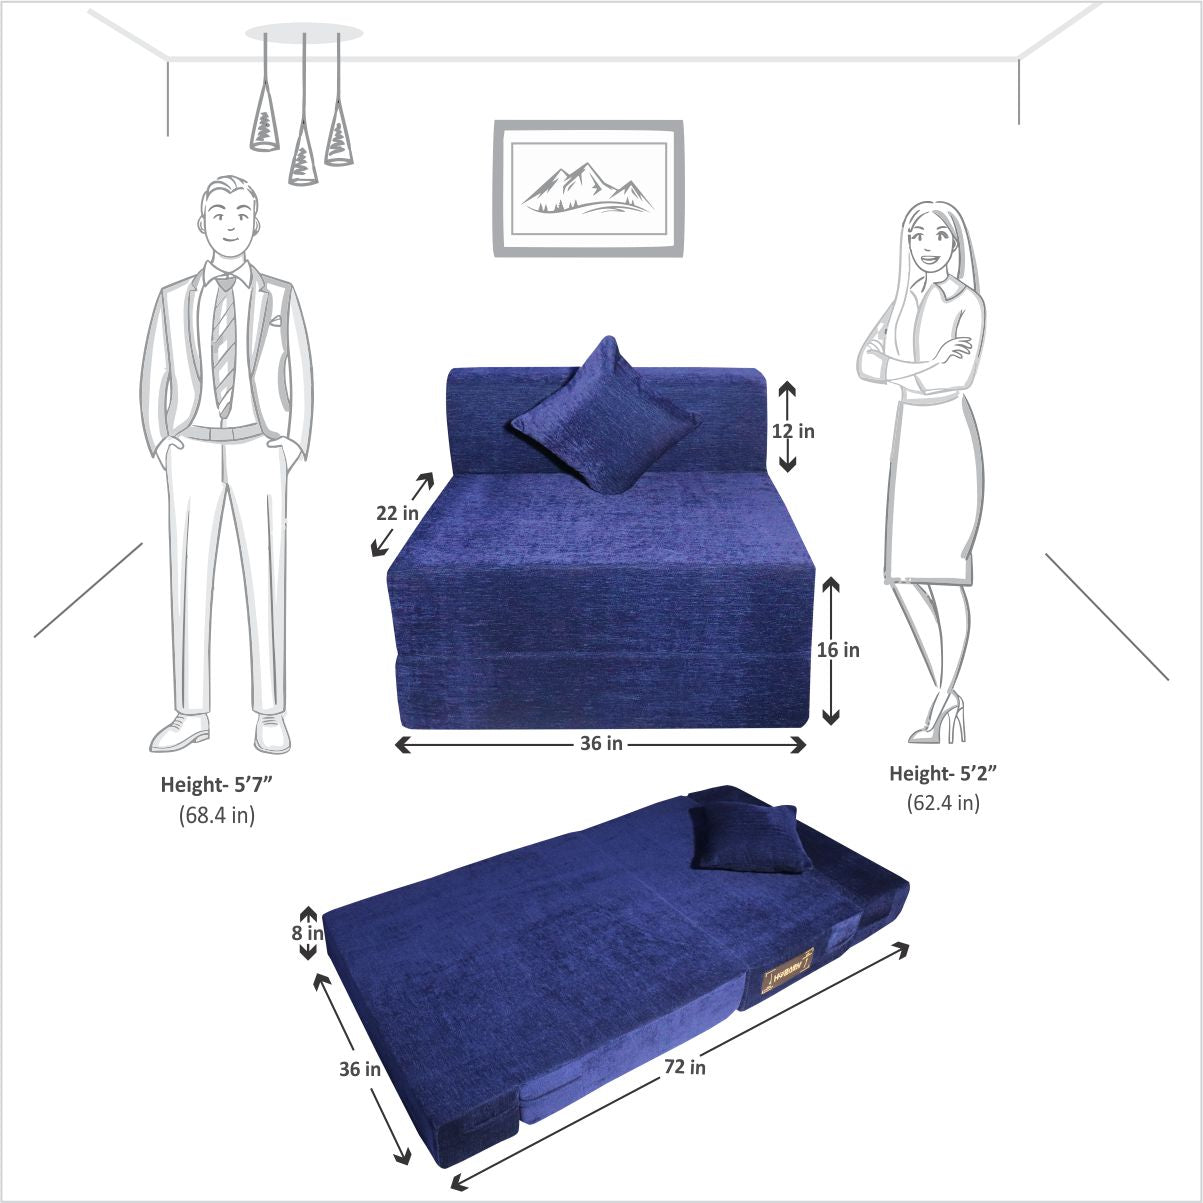 Cover of Blue Molfino Fabric 6'X3' Rejoice Sofa cum Bed